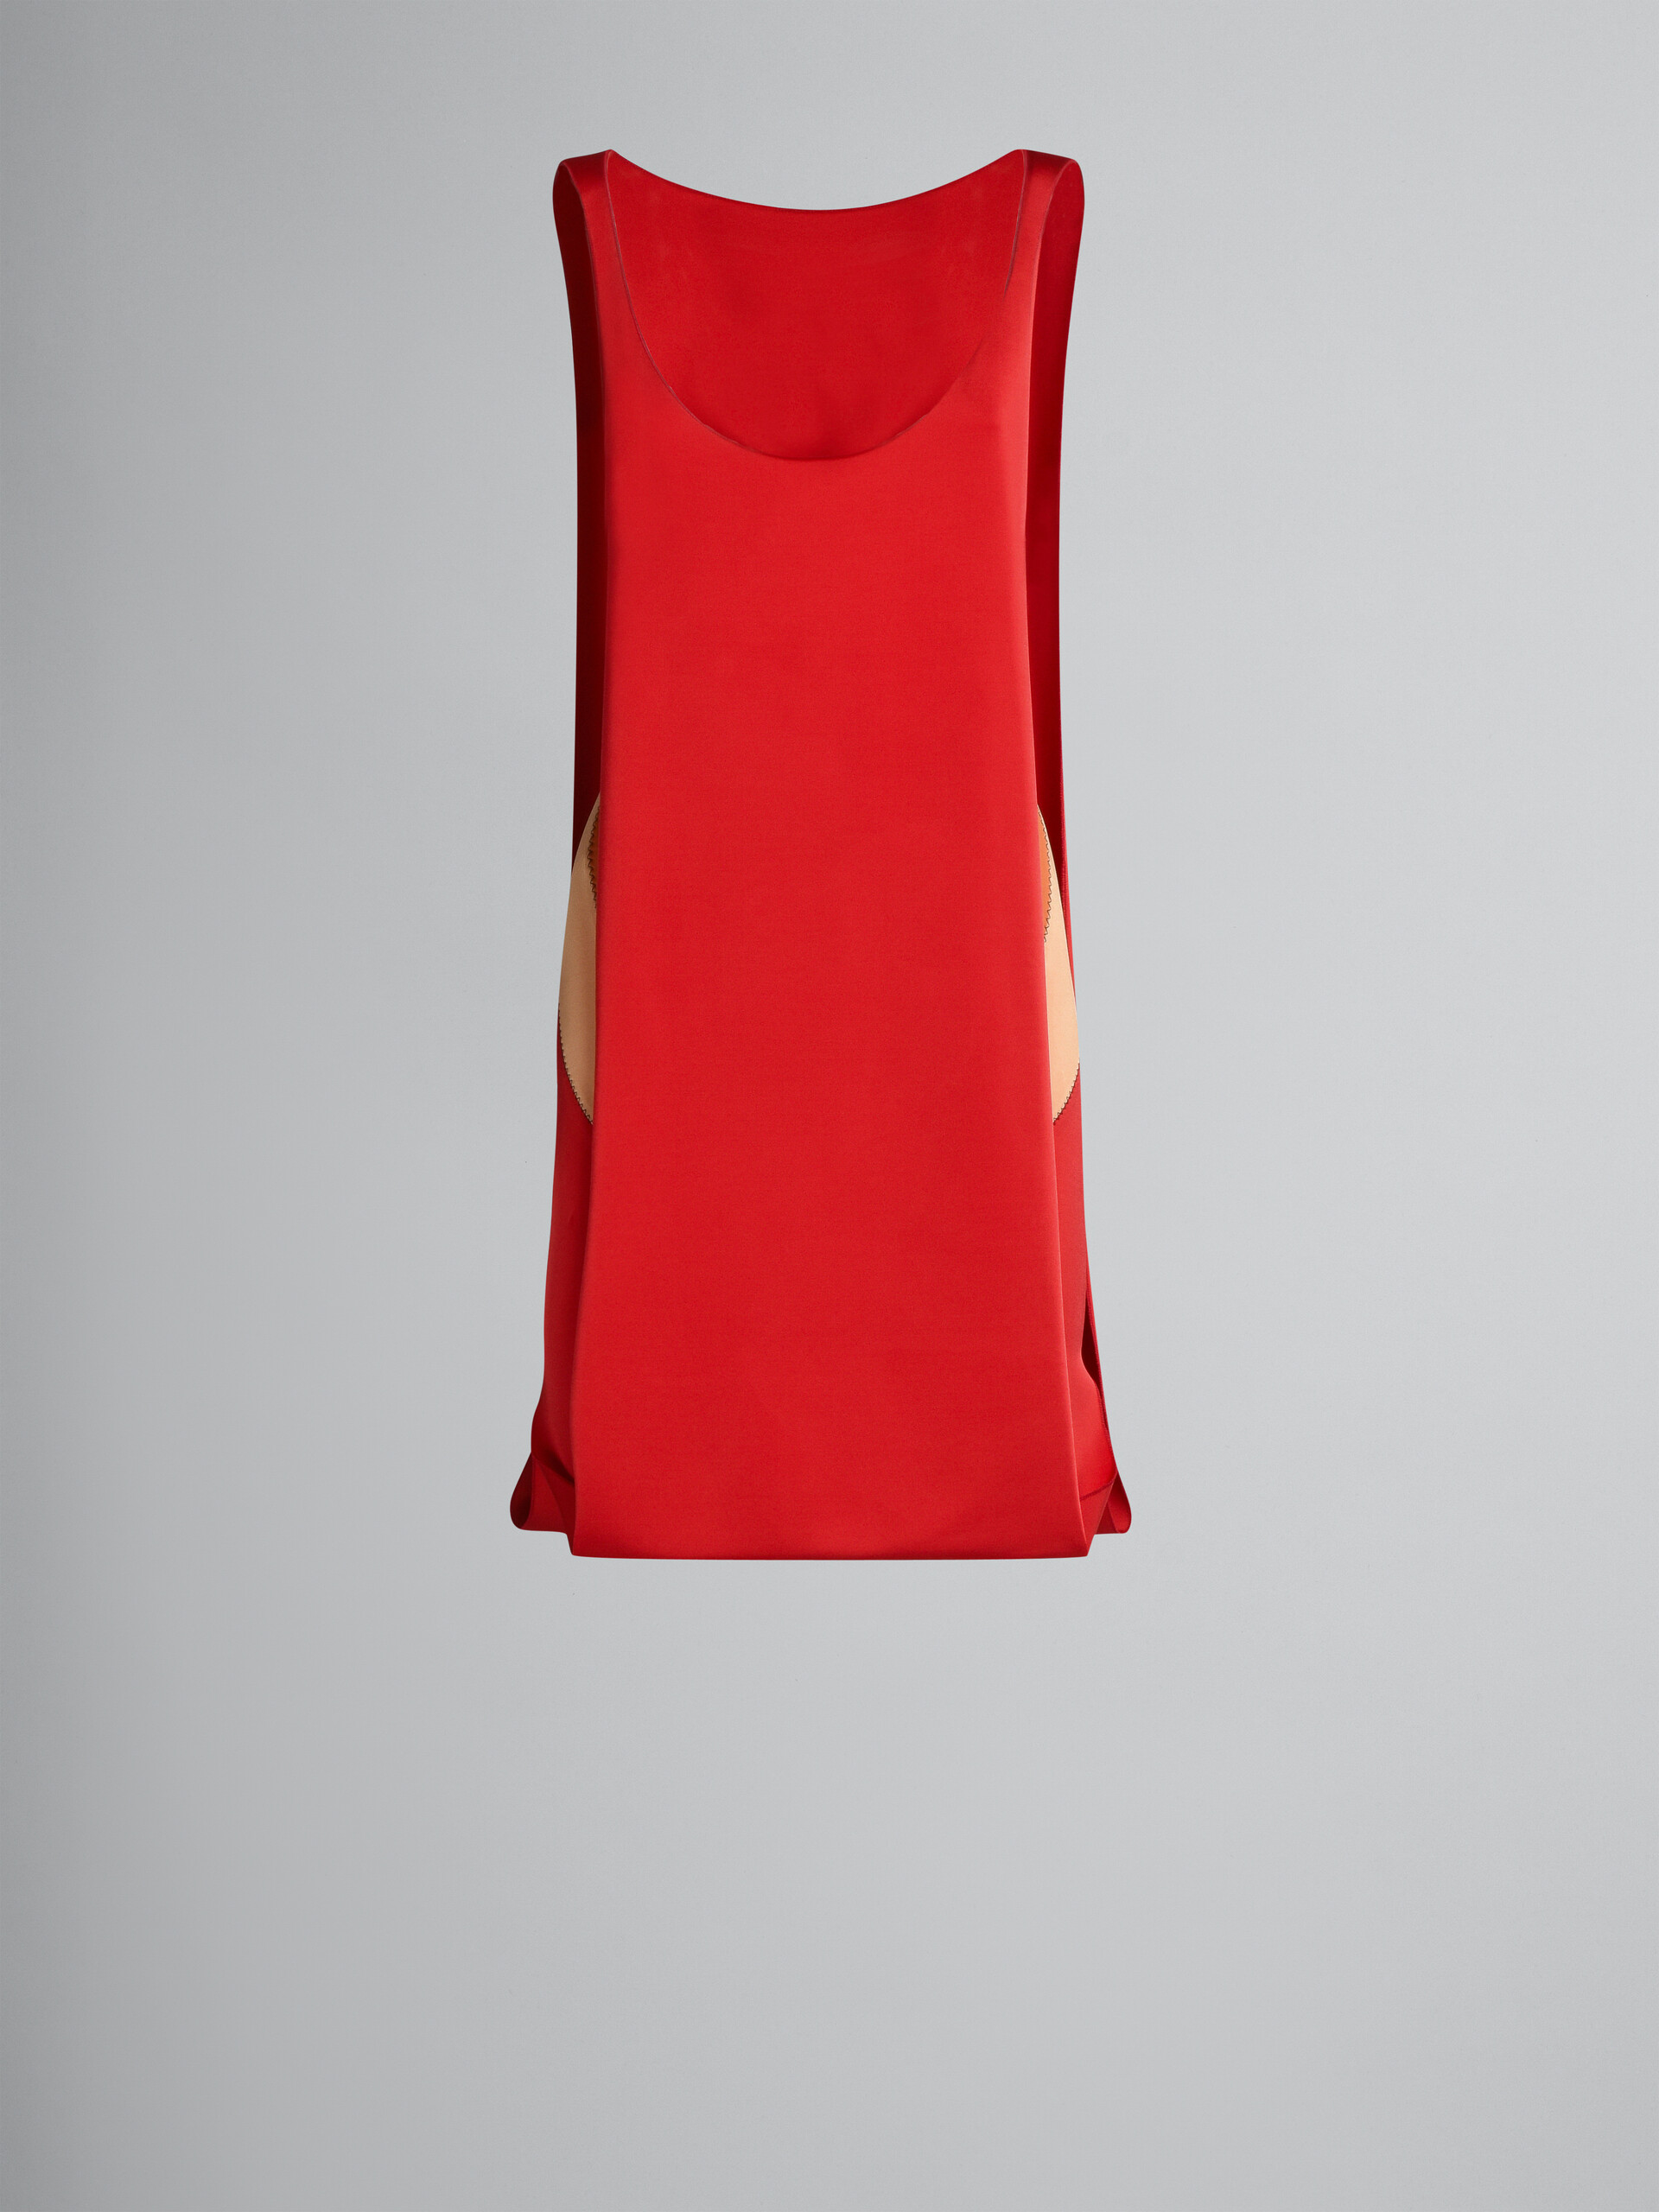 Minivestido drapeado rojo de jersey - Vestidos - Image 1